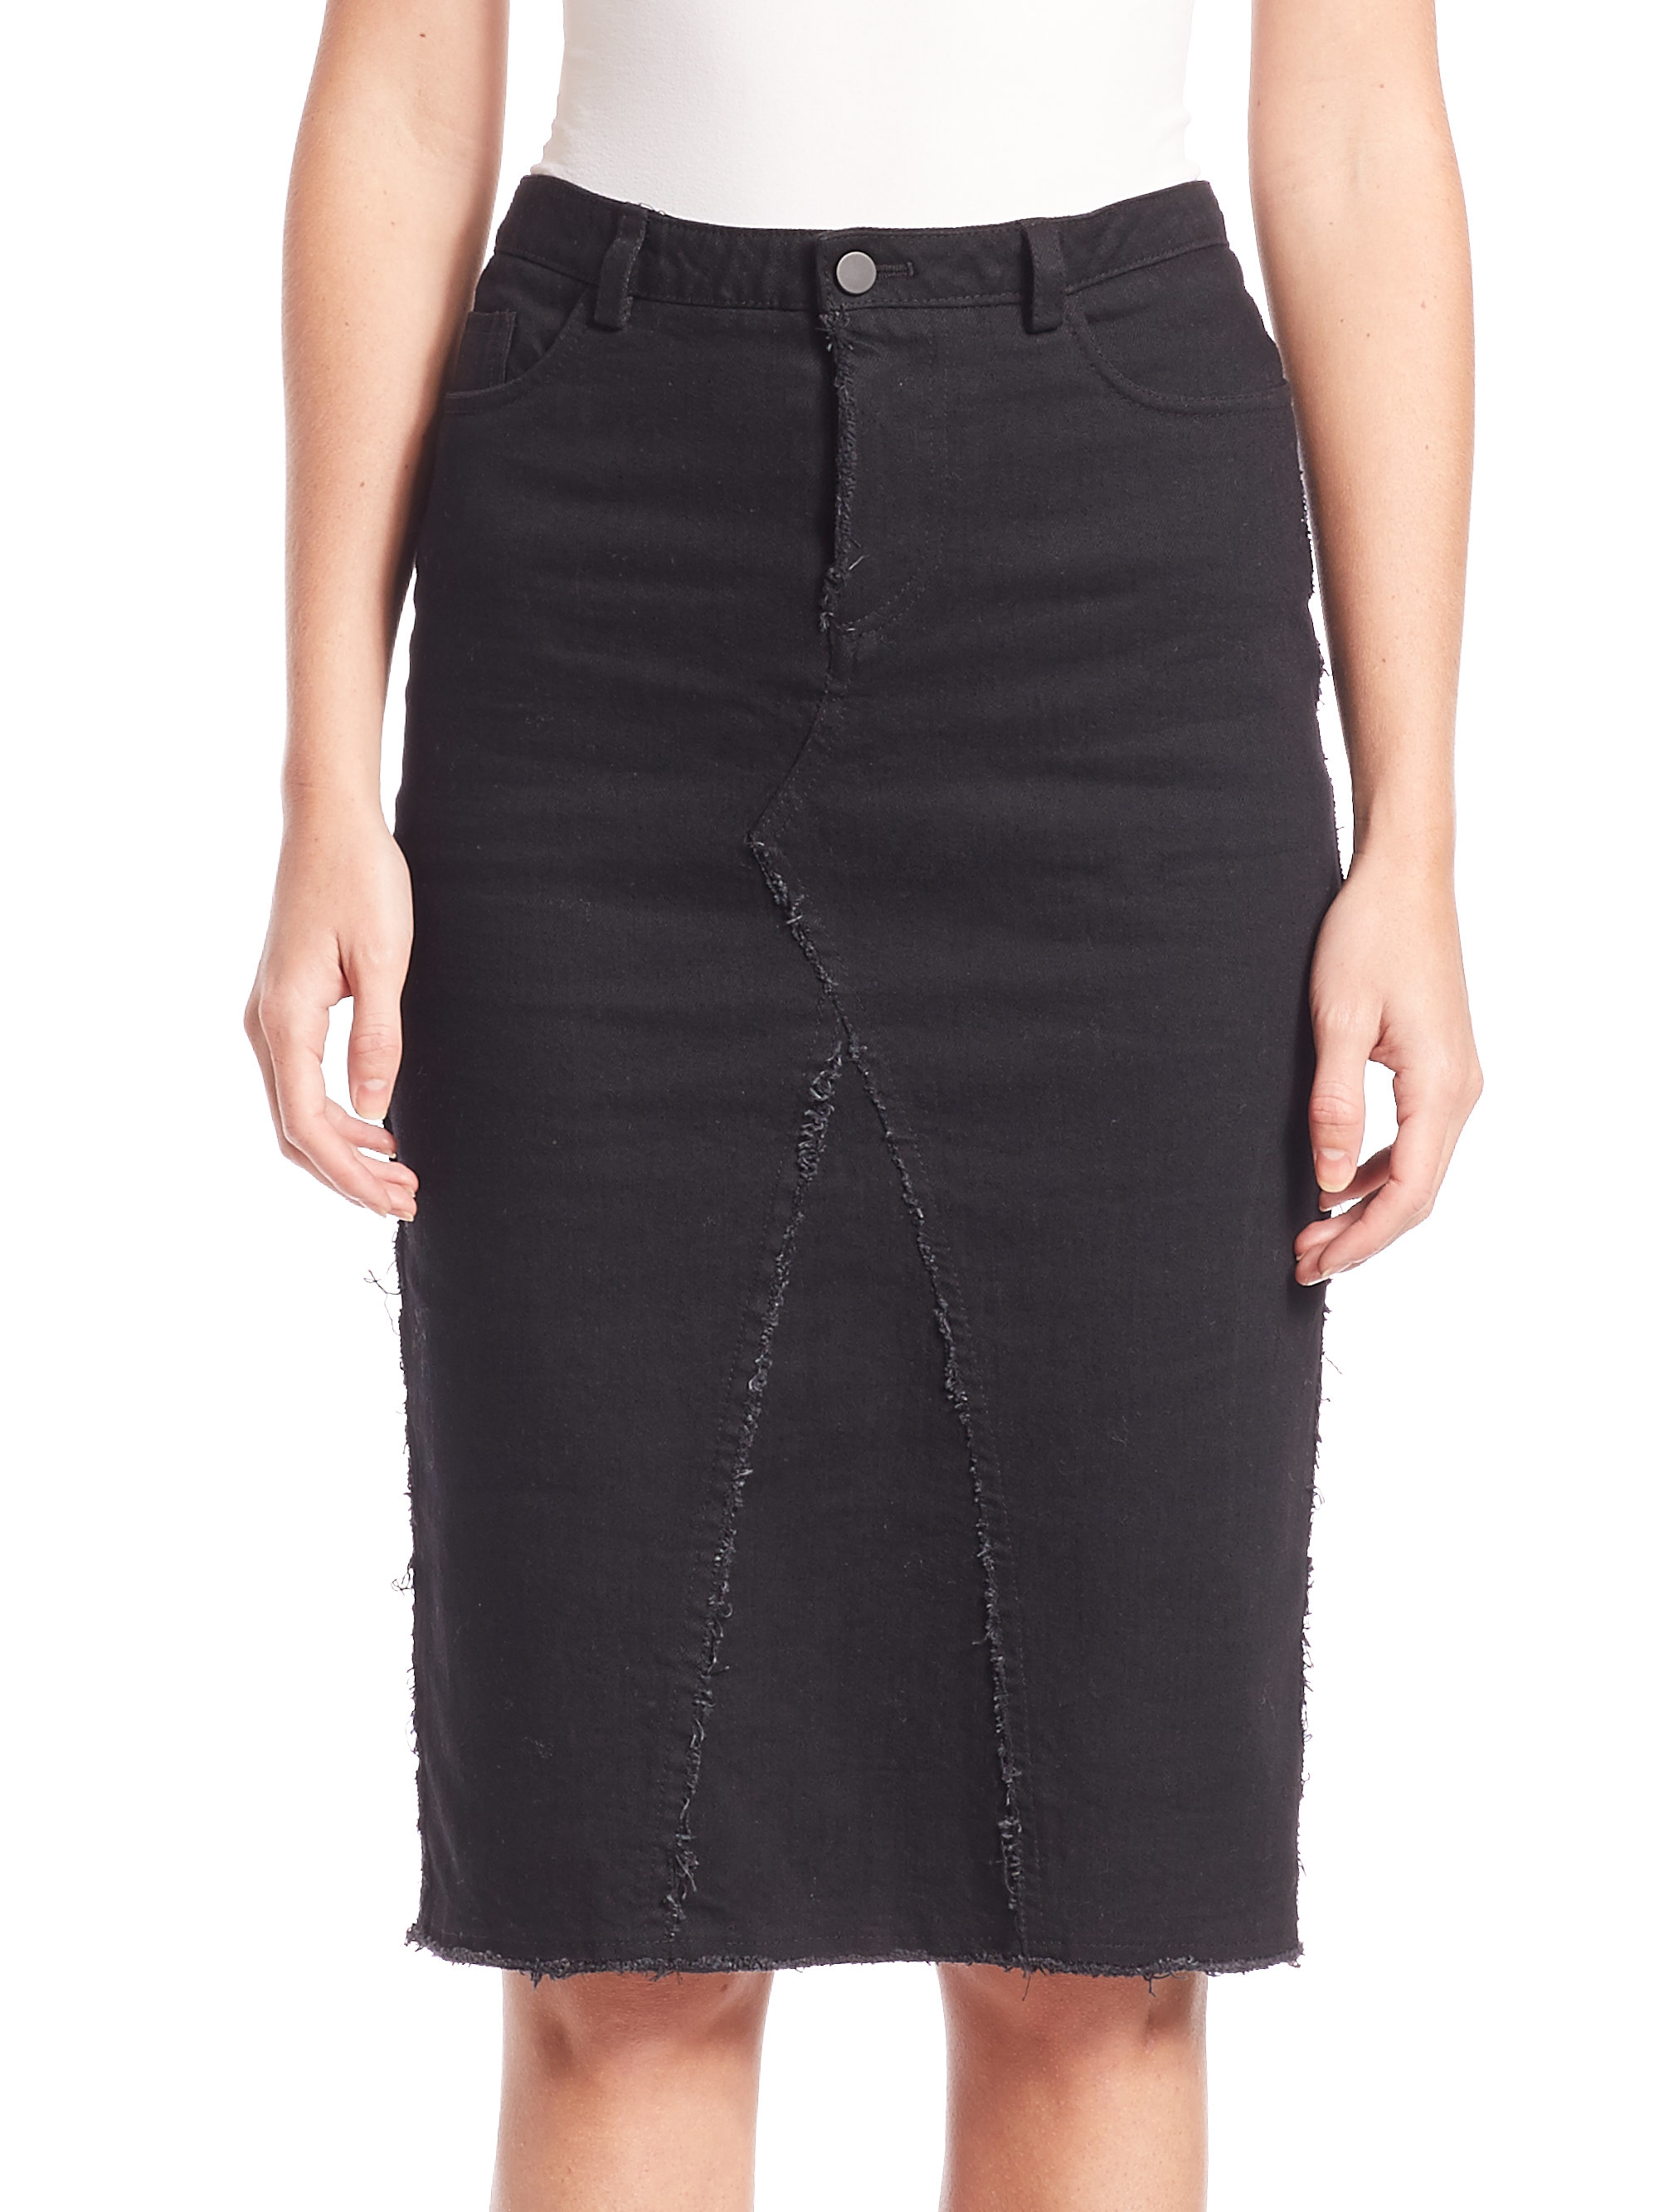 Lyst - Atm Frayed Denim Pencil Skirt in Black